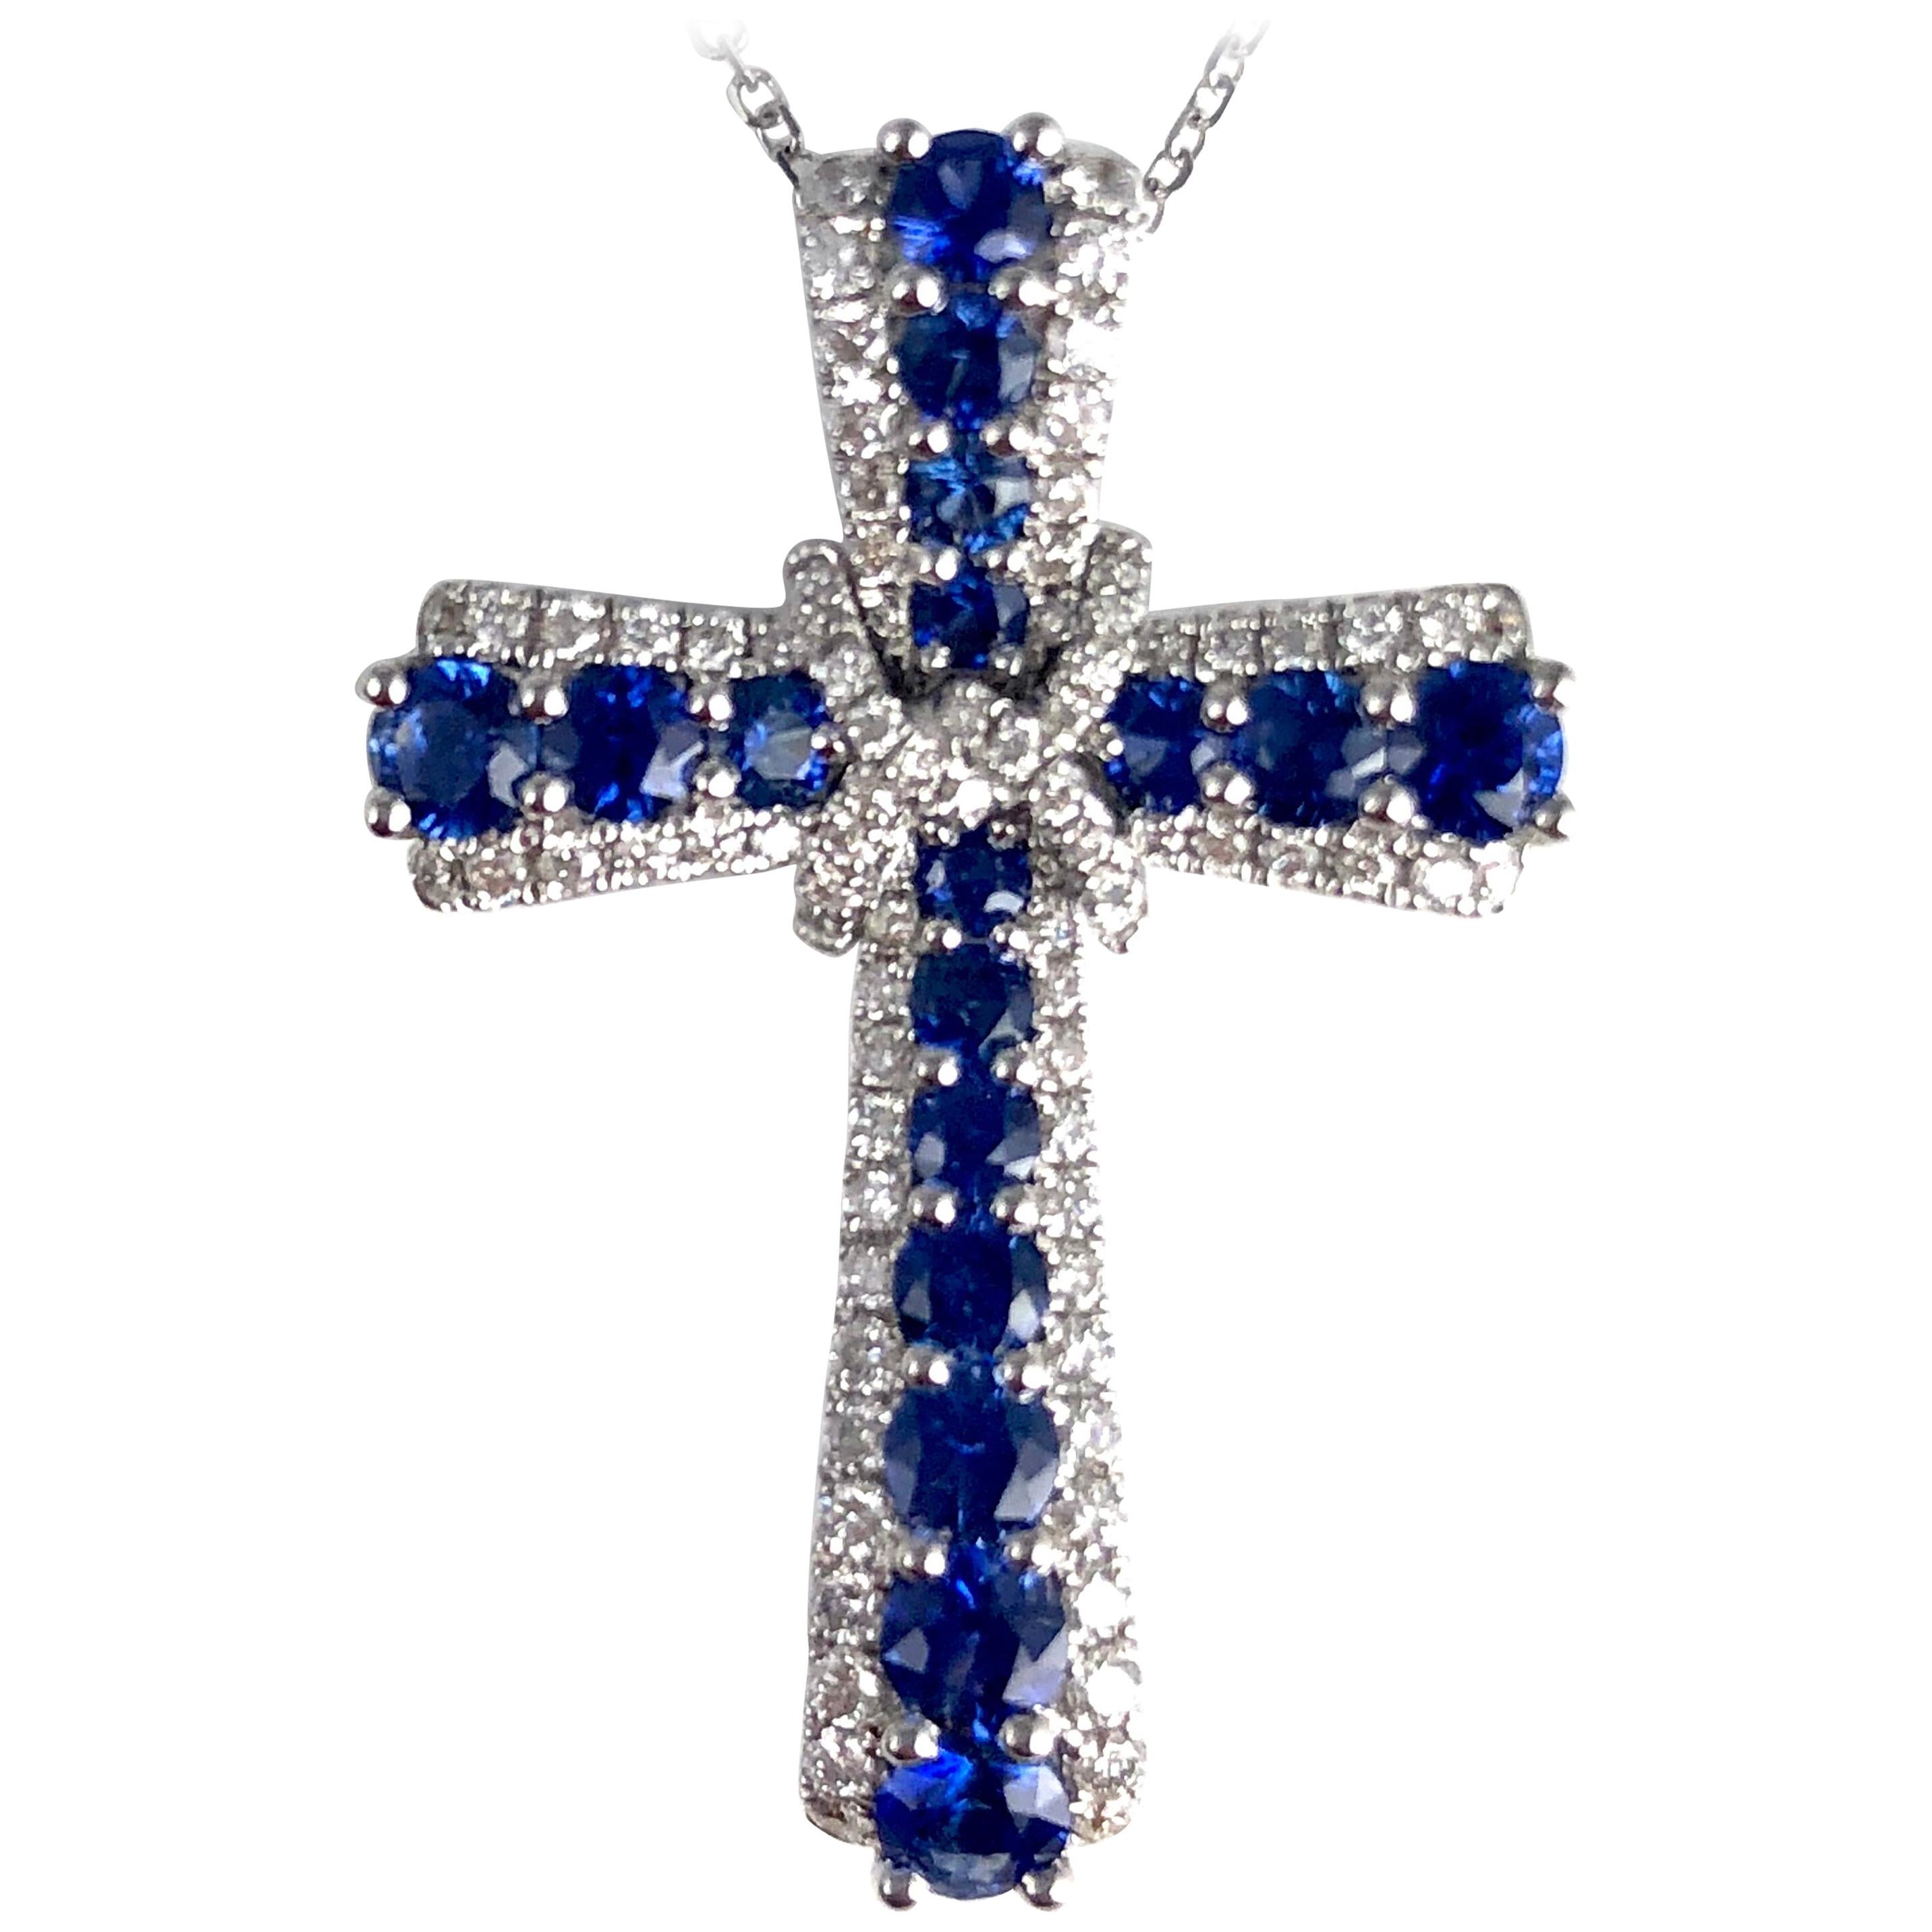 1.24 Carat Vivid Blue Sapphire and Diamond Embellished Cross Pendant